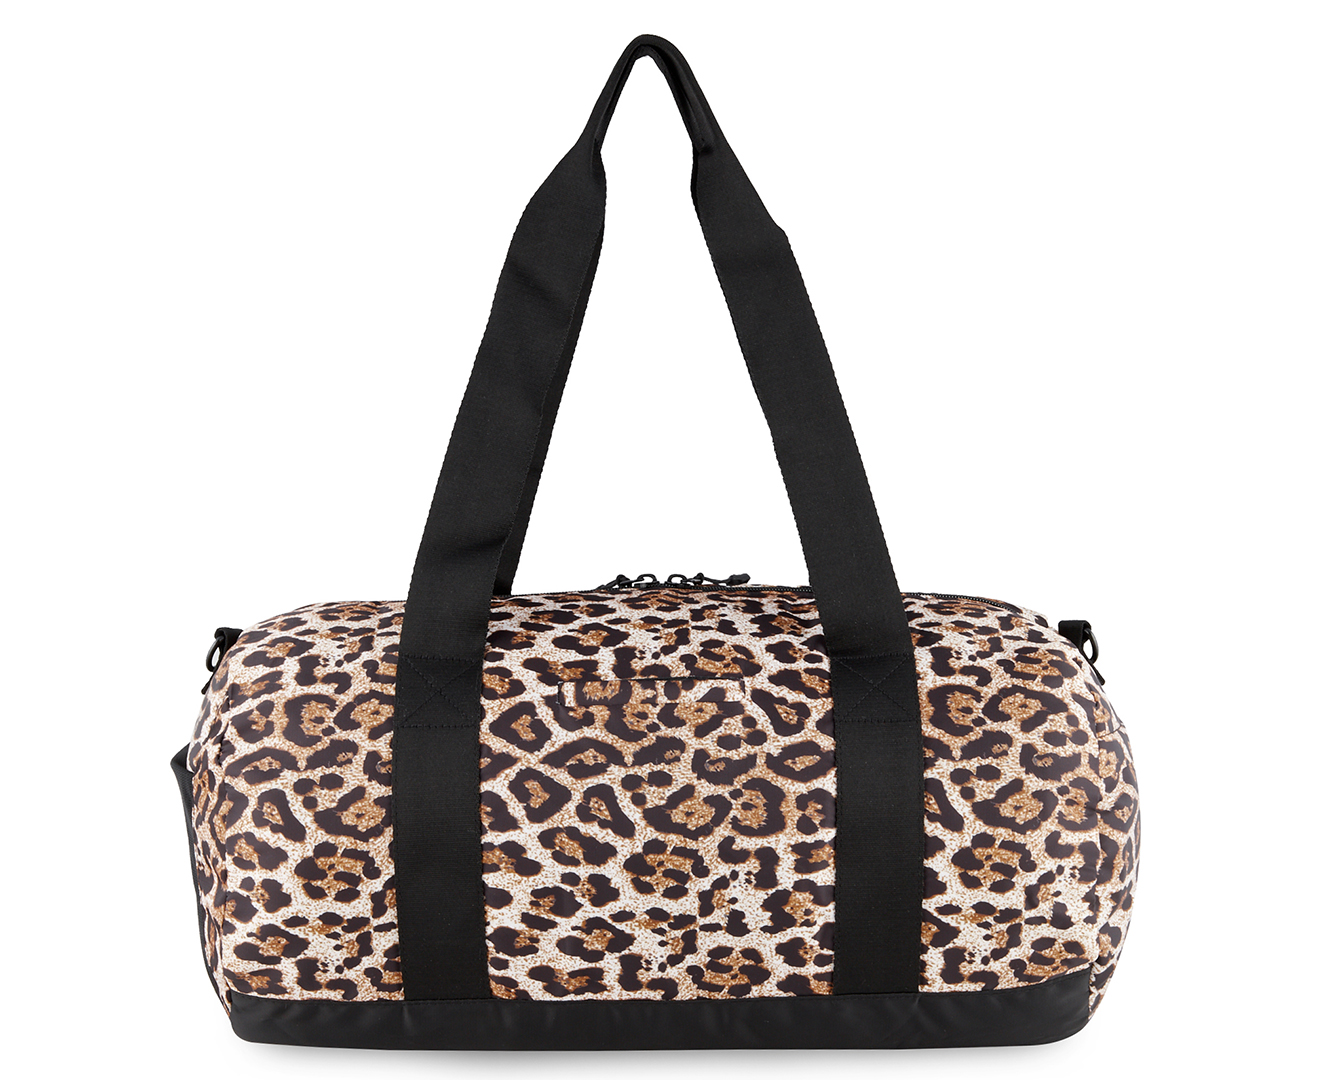 Vooray 27L Iconic Barrel Duffle Bag - Cheetah | Catch.co.nz